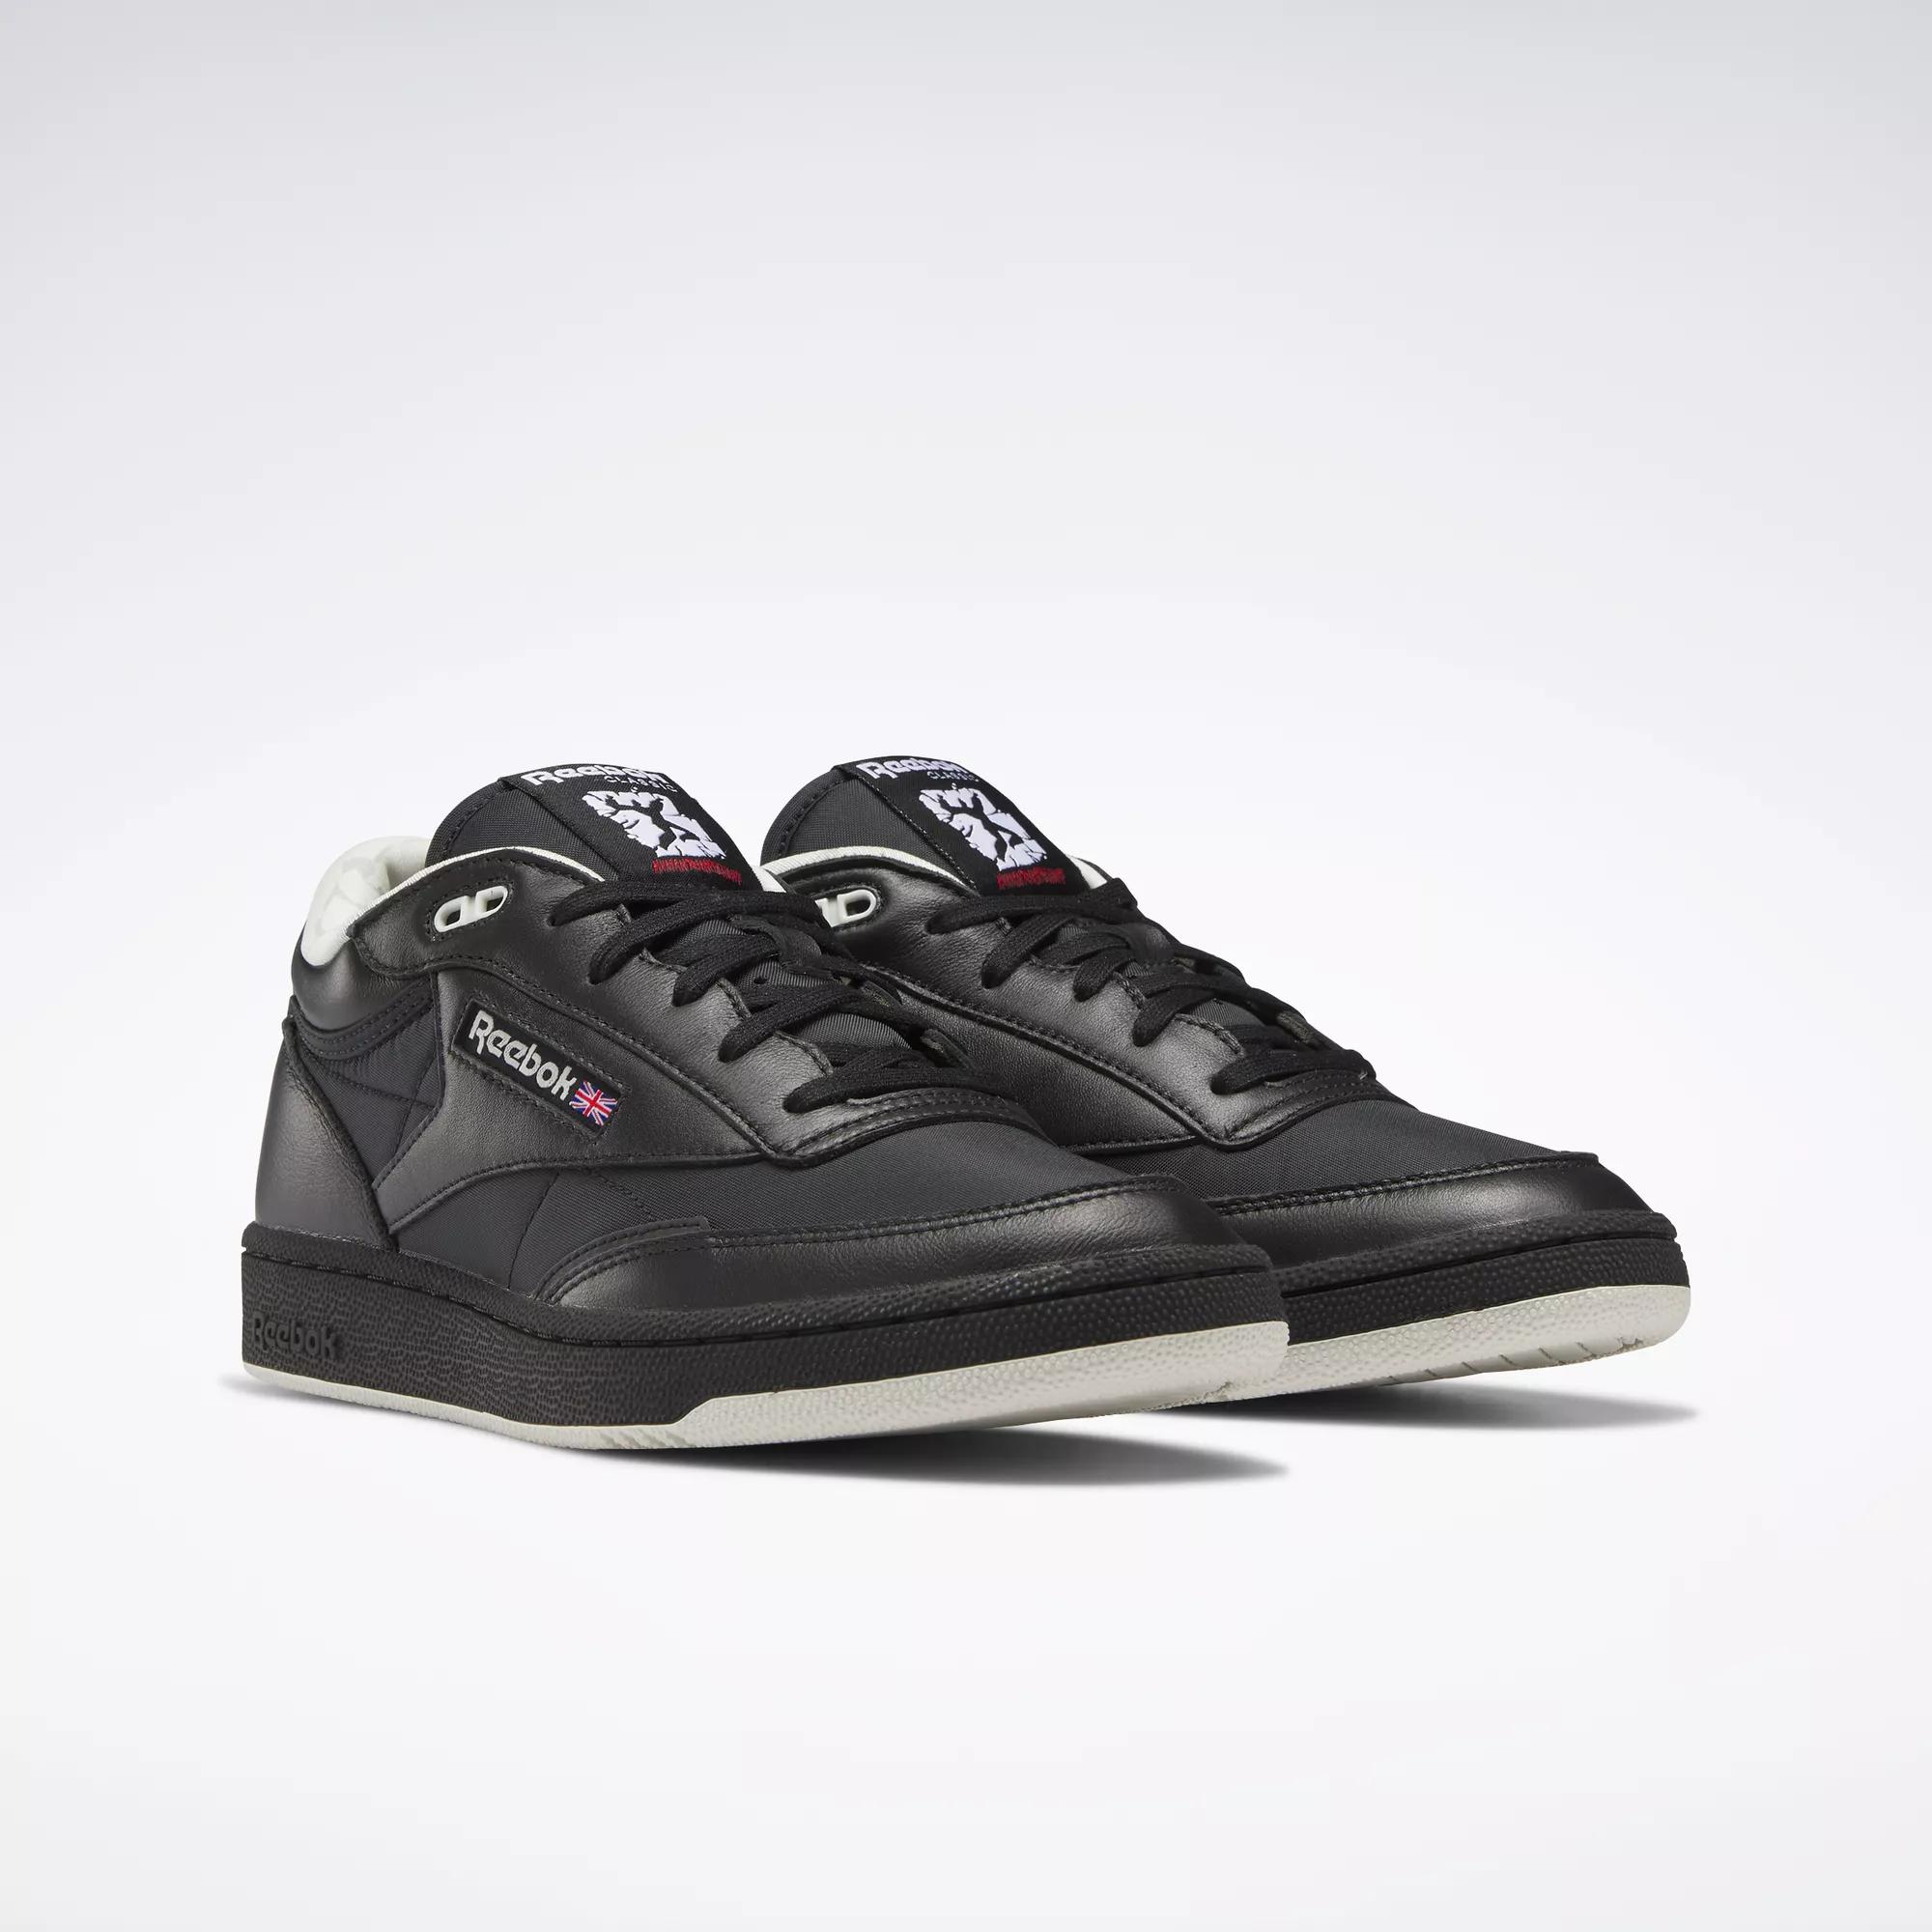 Club C 85 Mid II Shoes - Core Black / Core Black / Morning Fog | Reebok